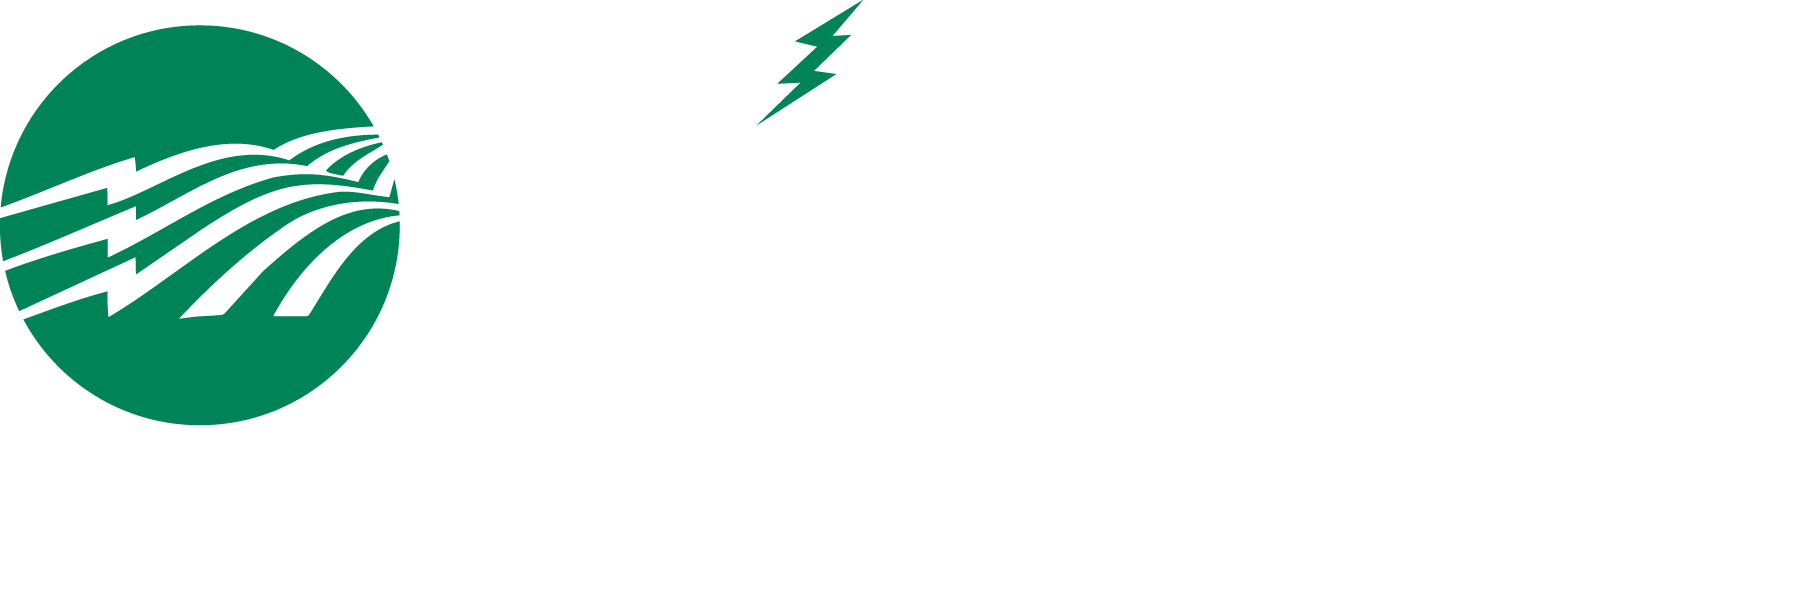 Midland Logo - GreenWhite